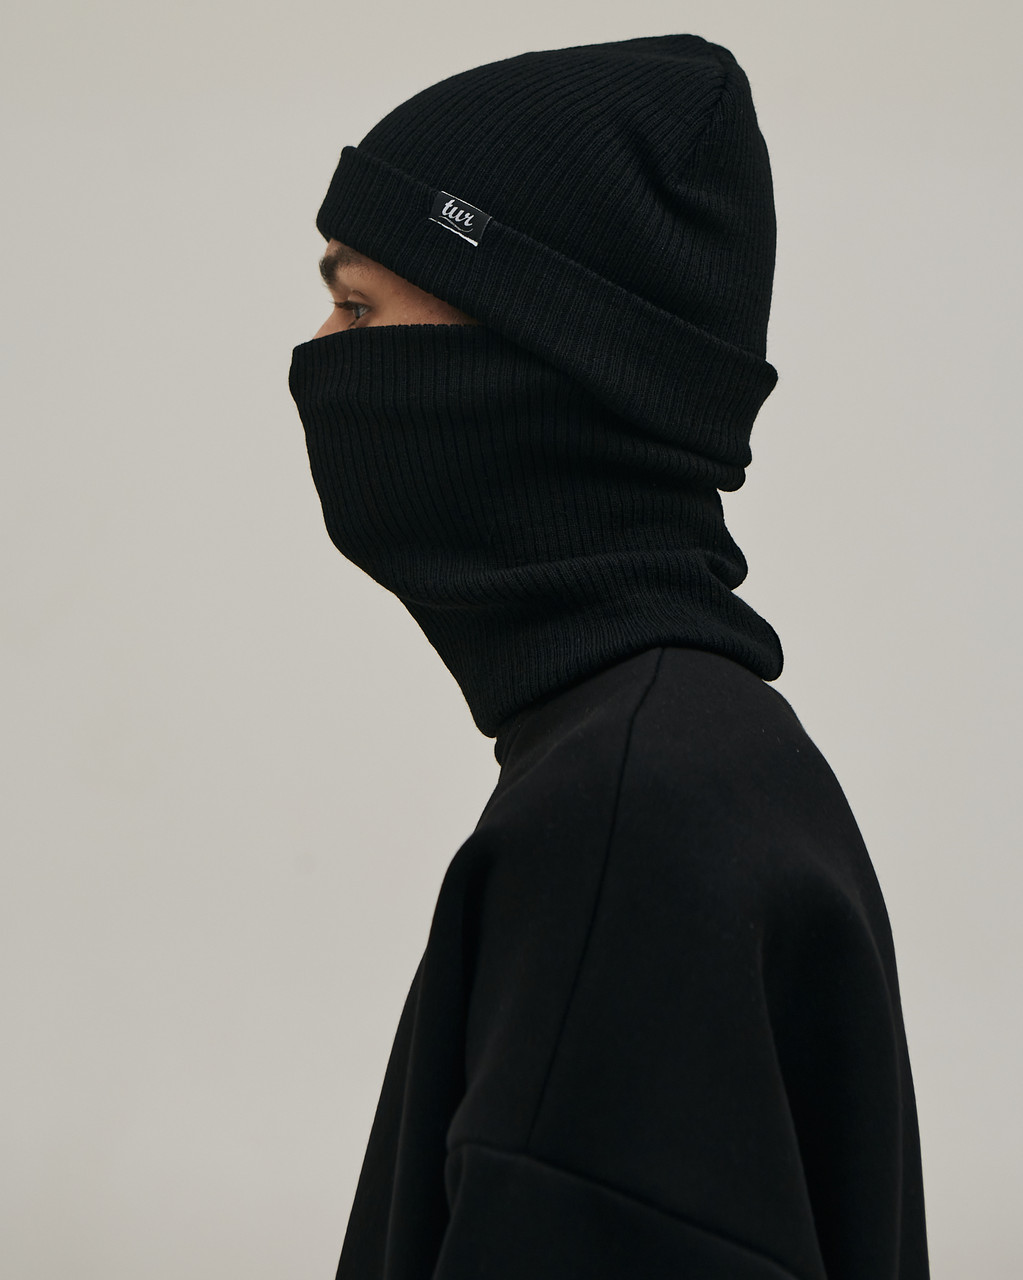 Зимняя шапка и бафф черные комплект от бренда ТУР TURWEAR - Фото 6